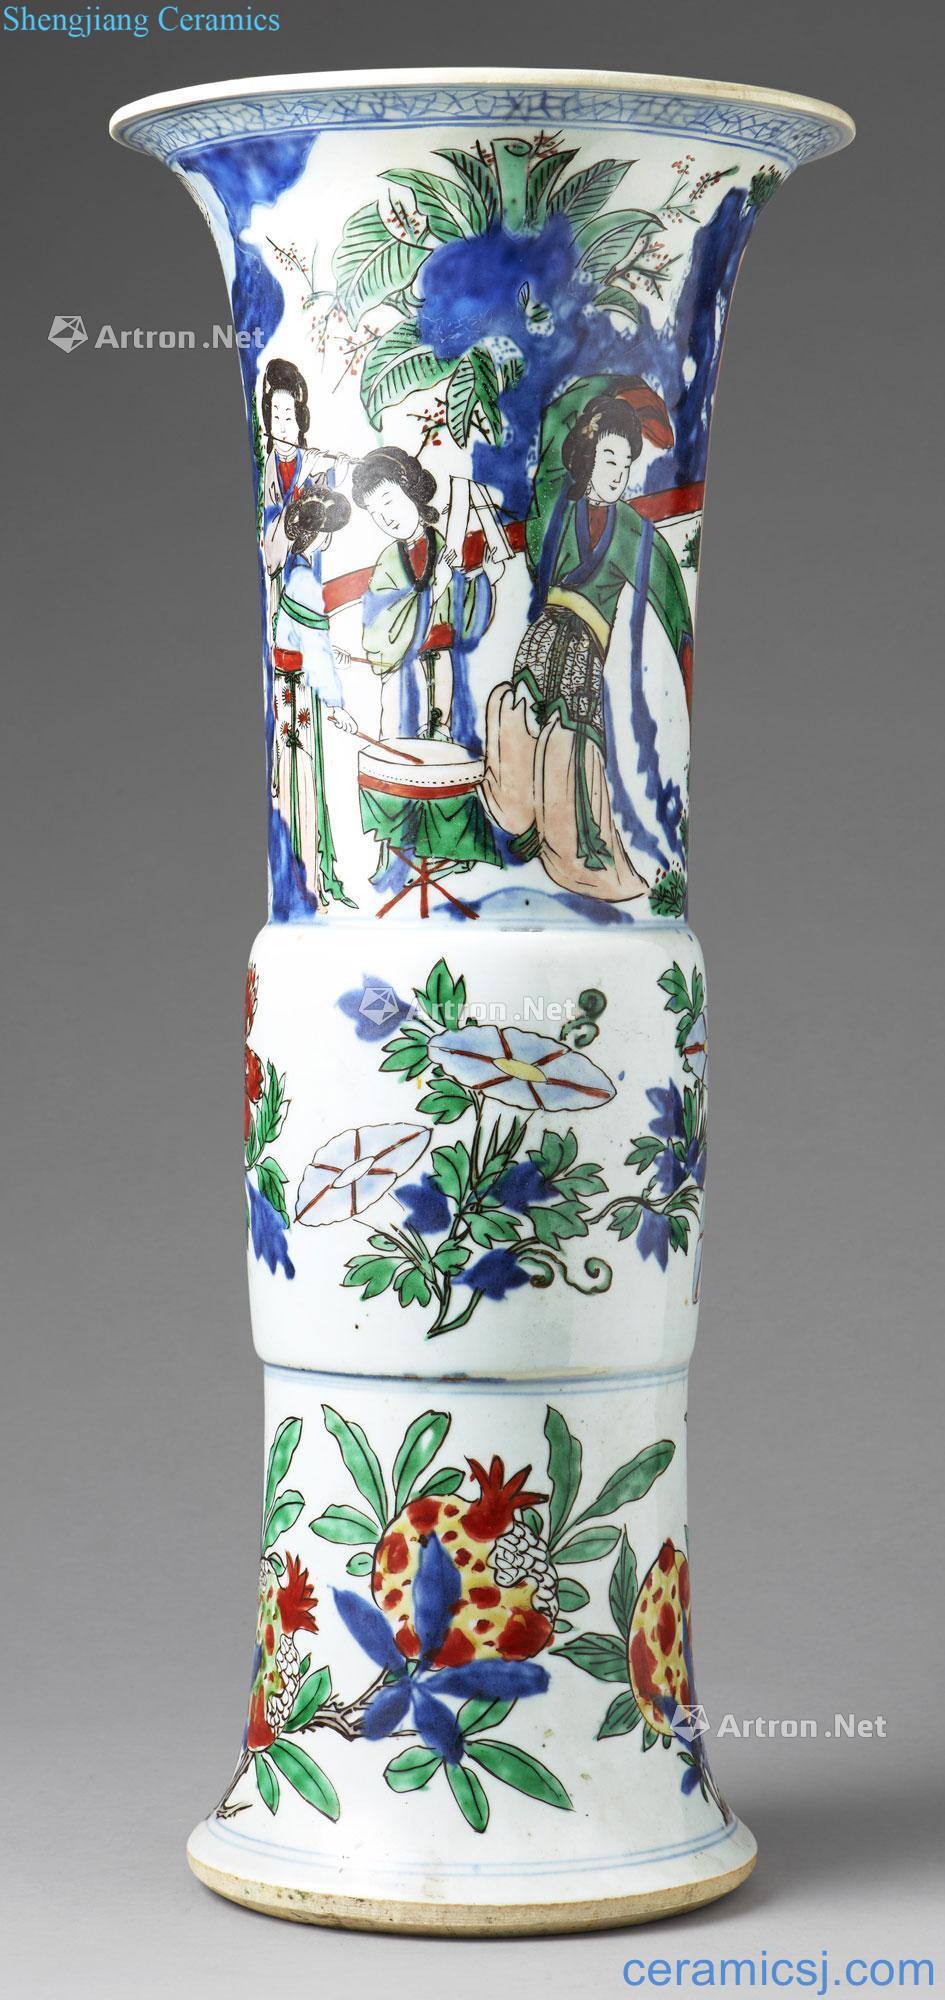 Shunzhi colorful flower vase with a bottle